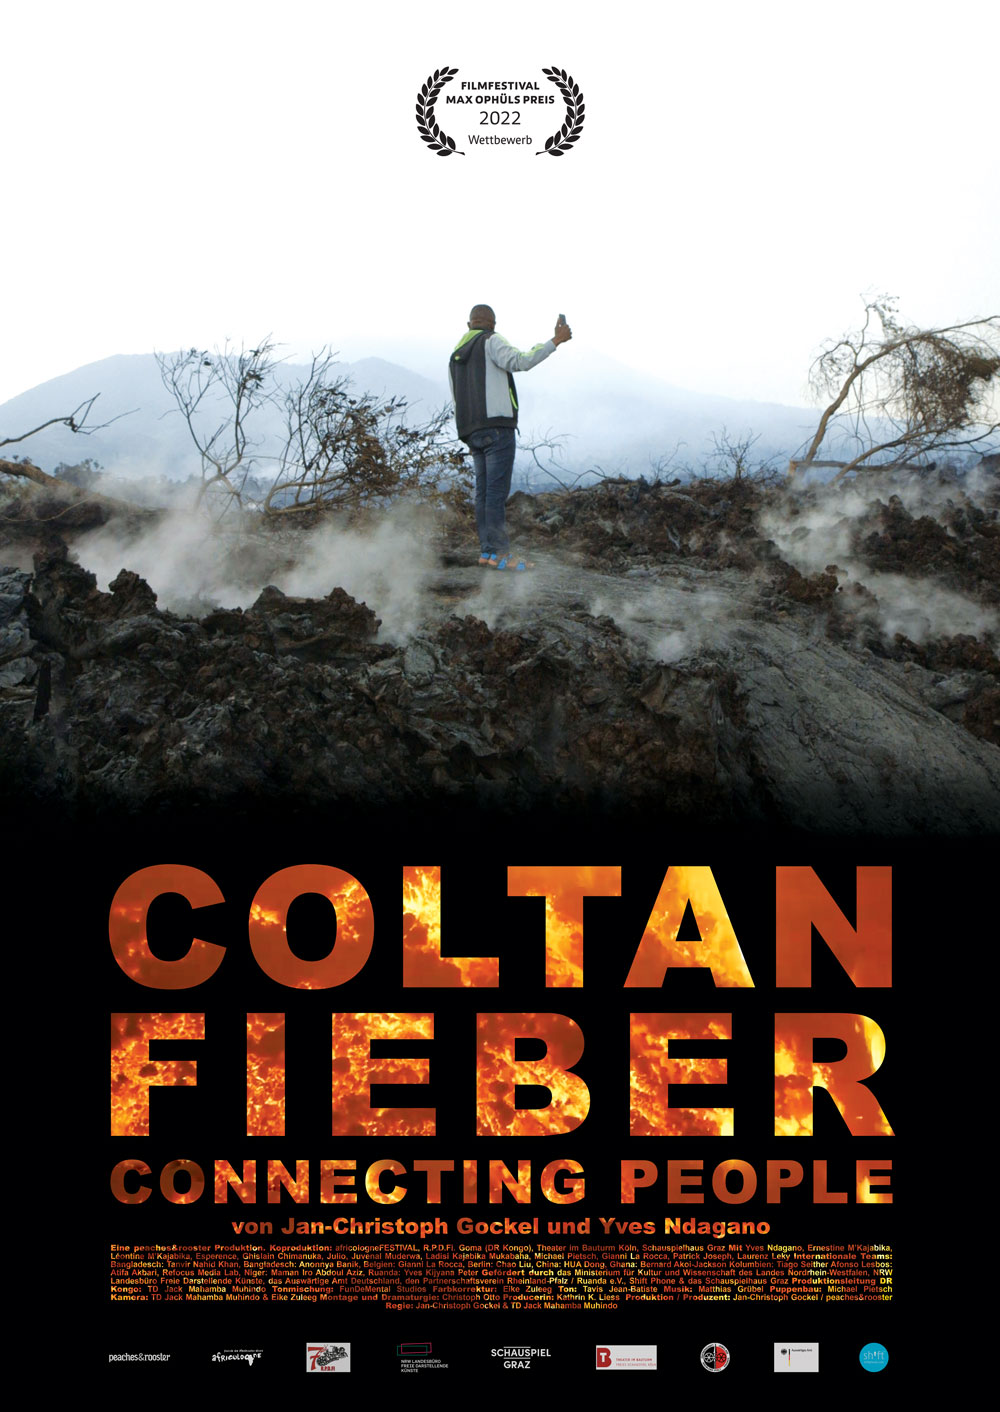 Coltan Fever | movie poster & pressbook